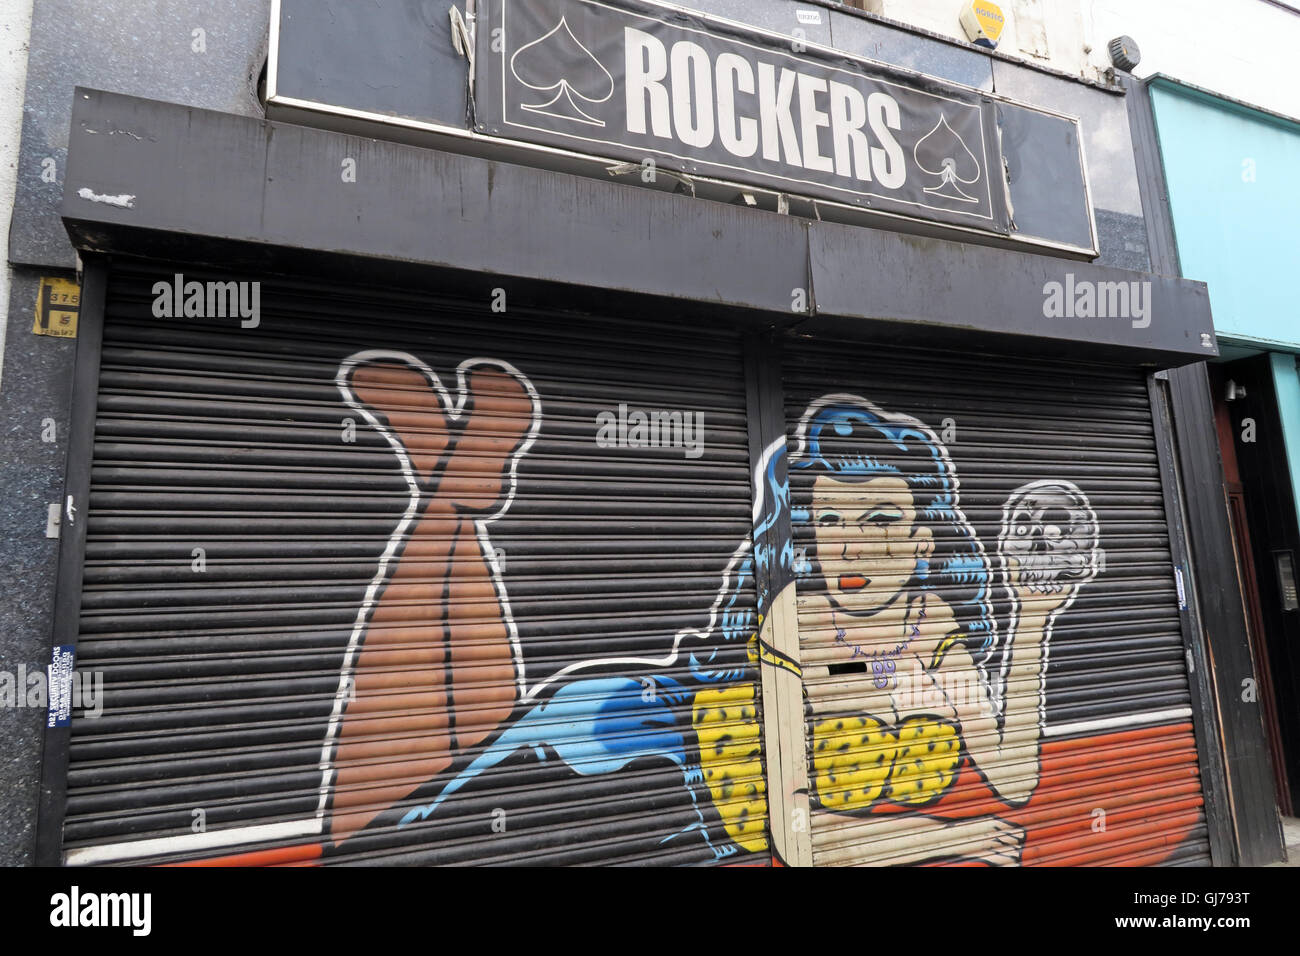 Rockers Angleterre shop volets, quart nord Art, NQ, Manchester, North West England, UK, M1 1JR Banque D'Images